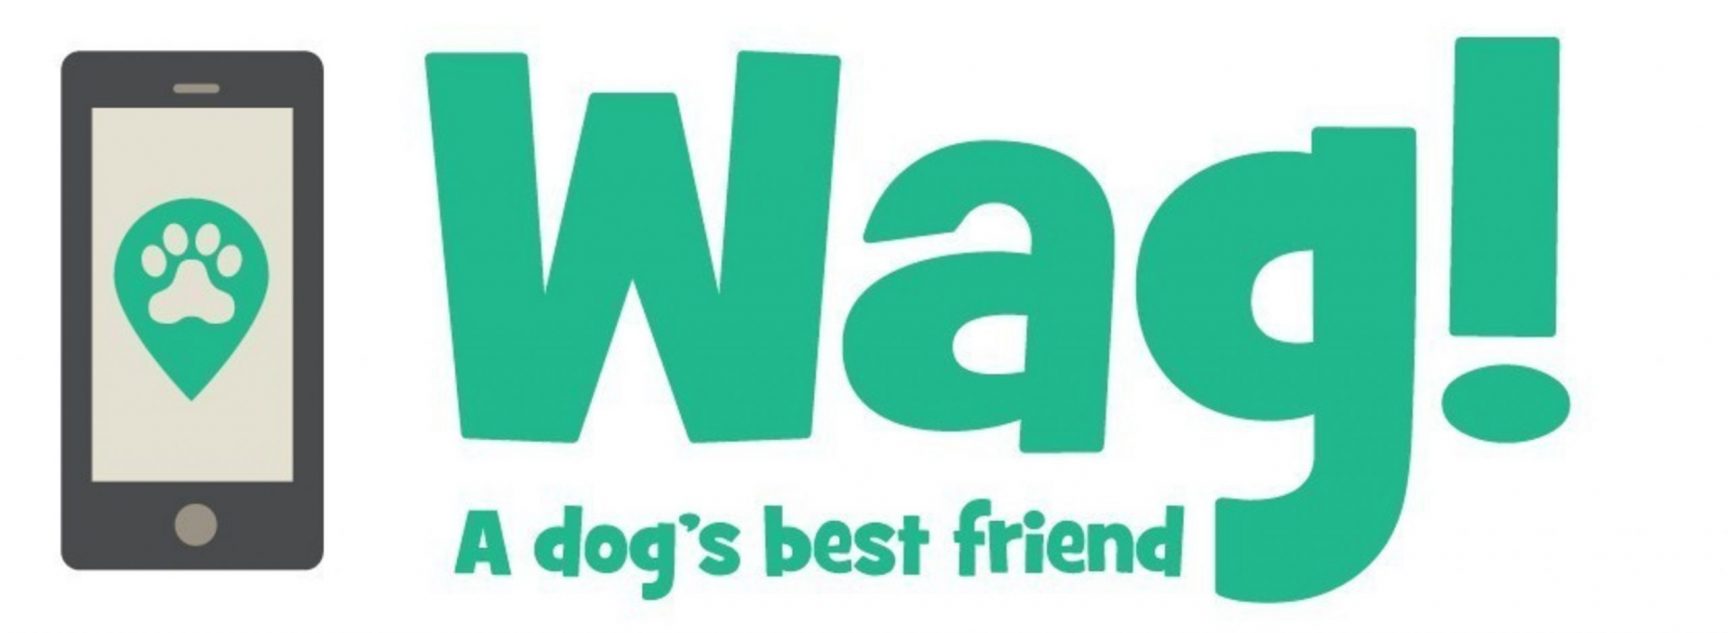 Wag, Pet Care, Dog Walking, Dog Sitting